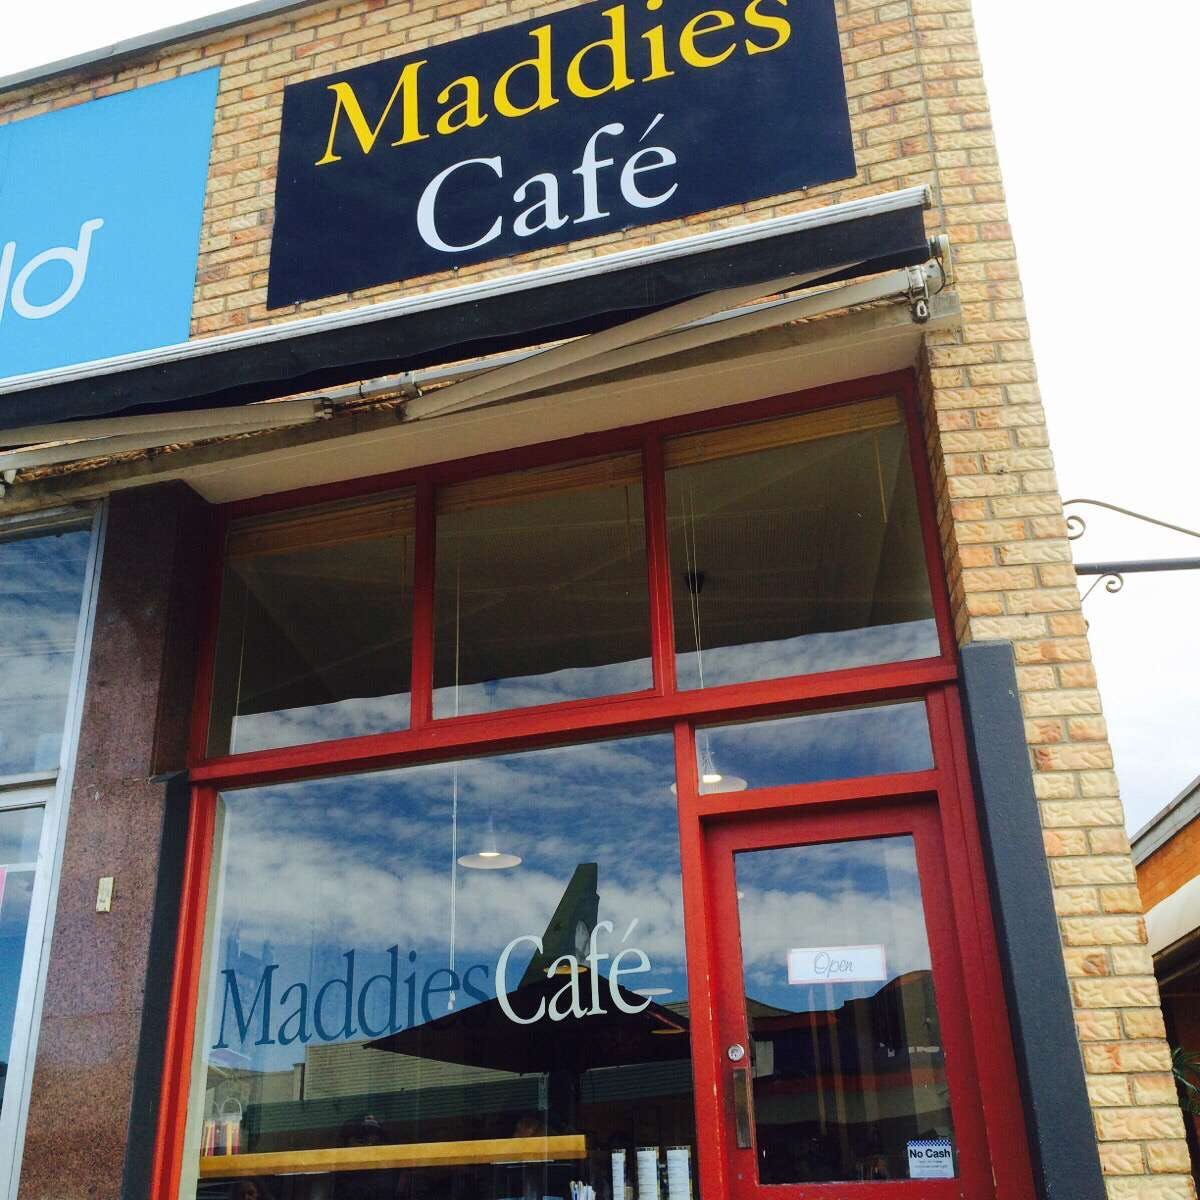 Maddies Cafe